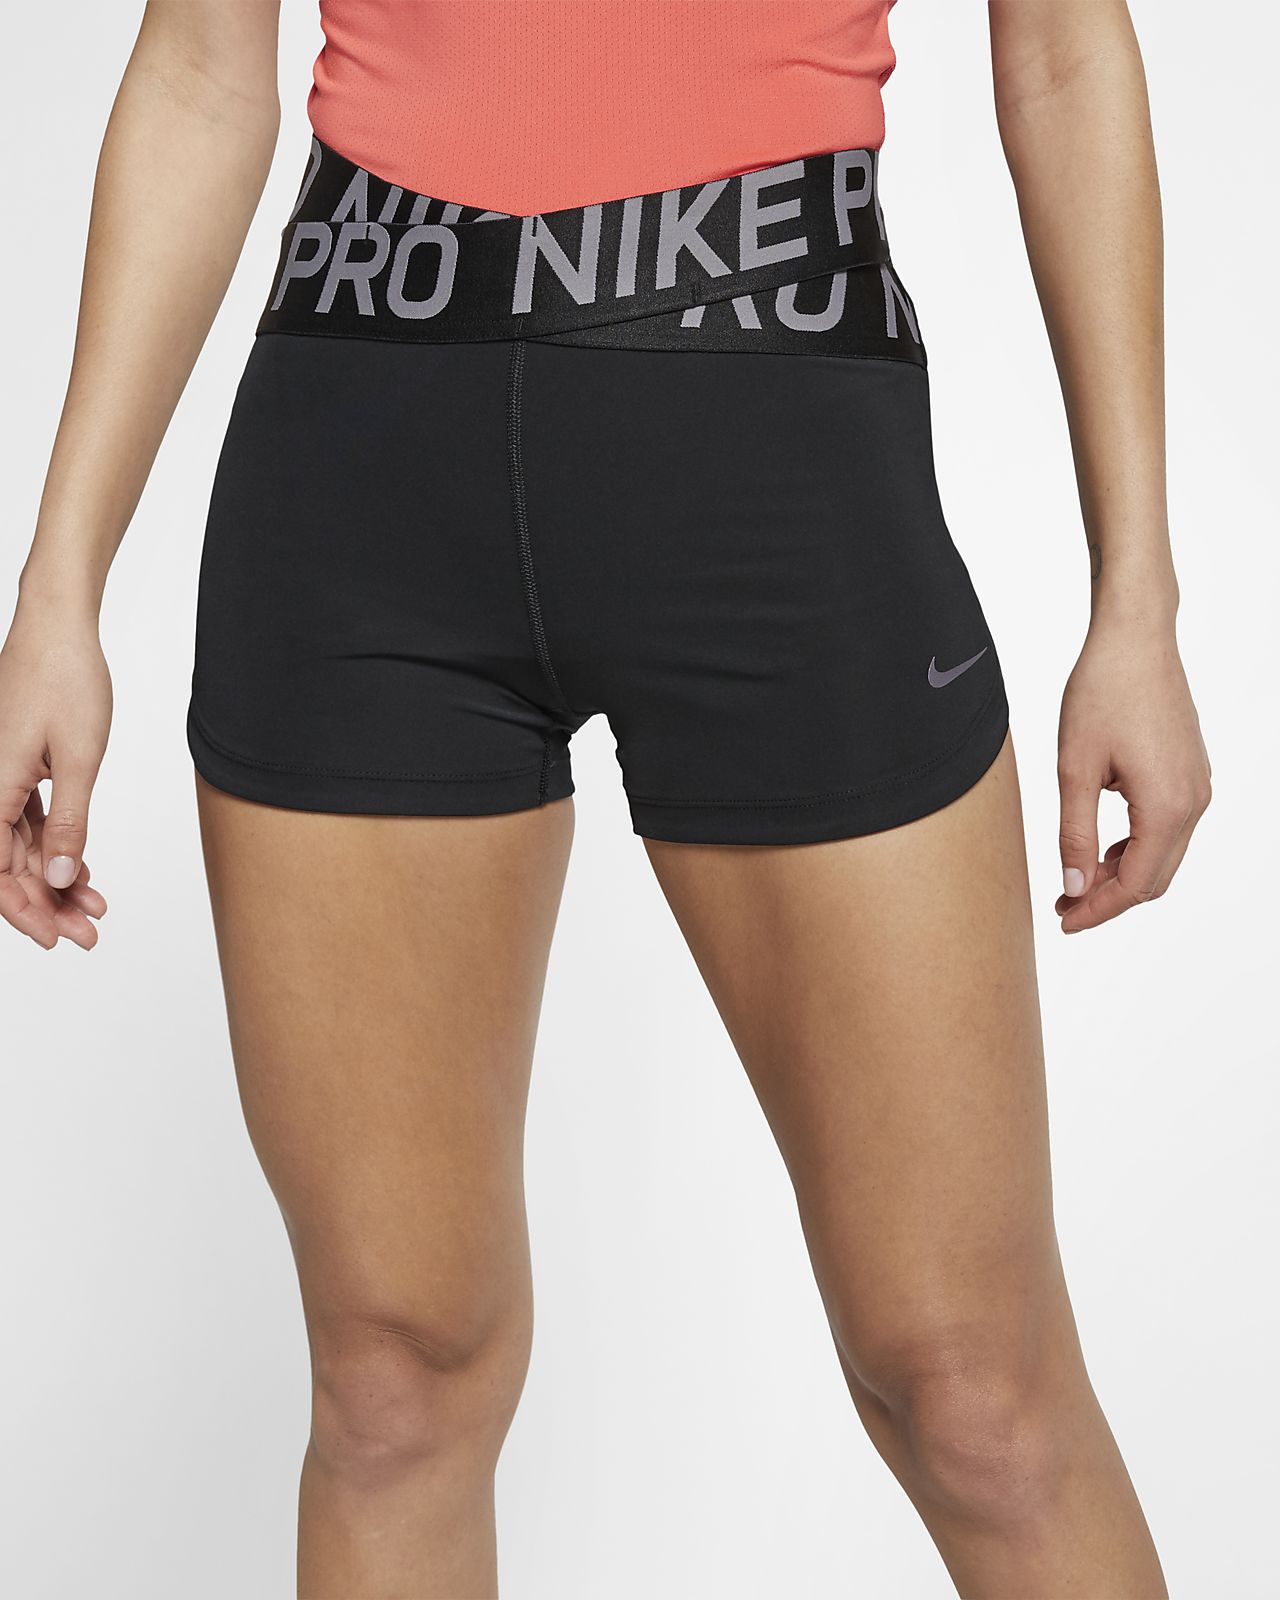 nike pro volleyball spandex shorts